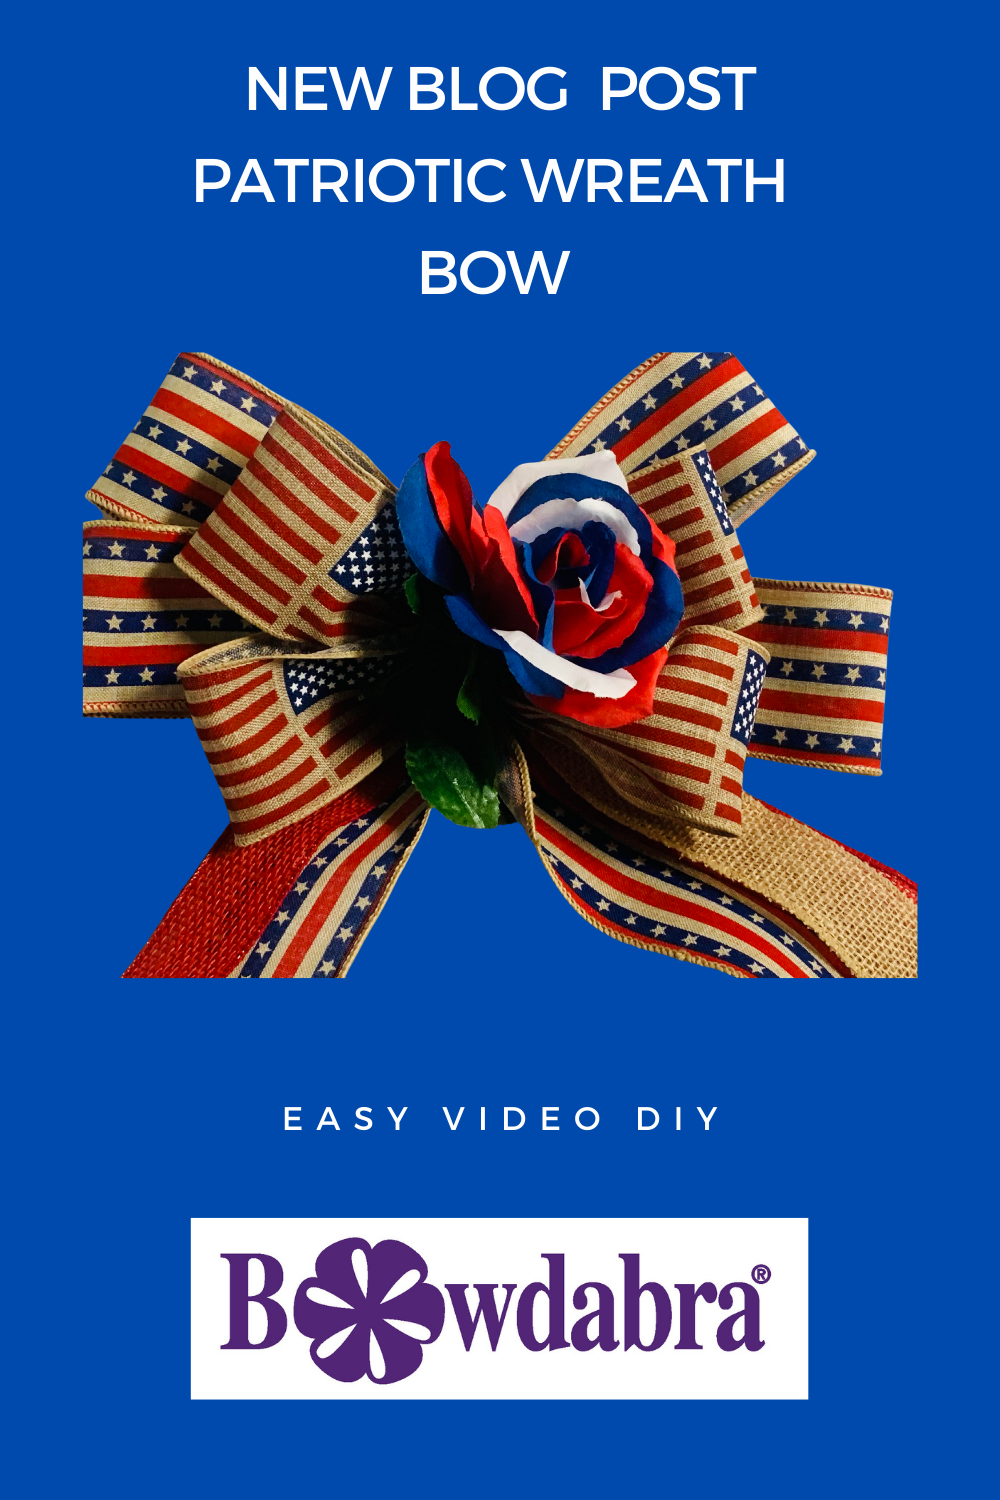 Bowdabra All In One Patriotic Ribbon Kit Online For DIY Bows